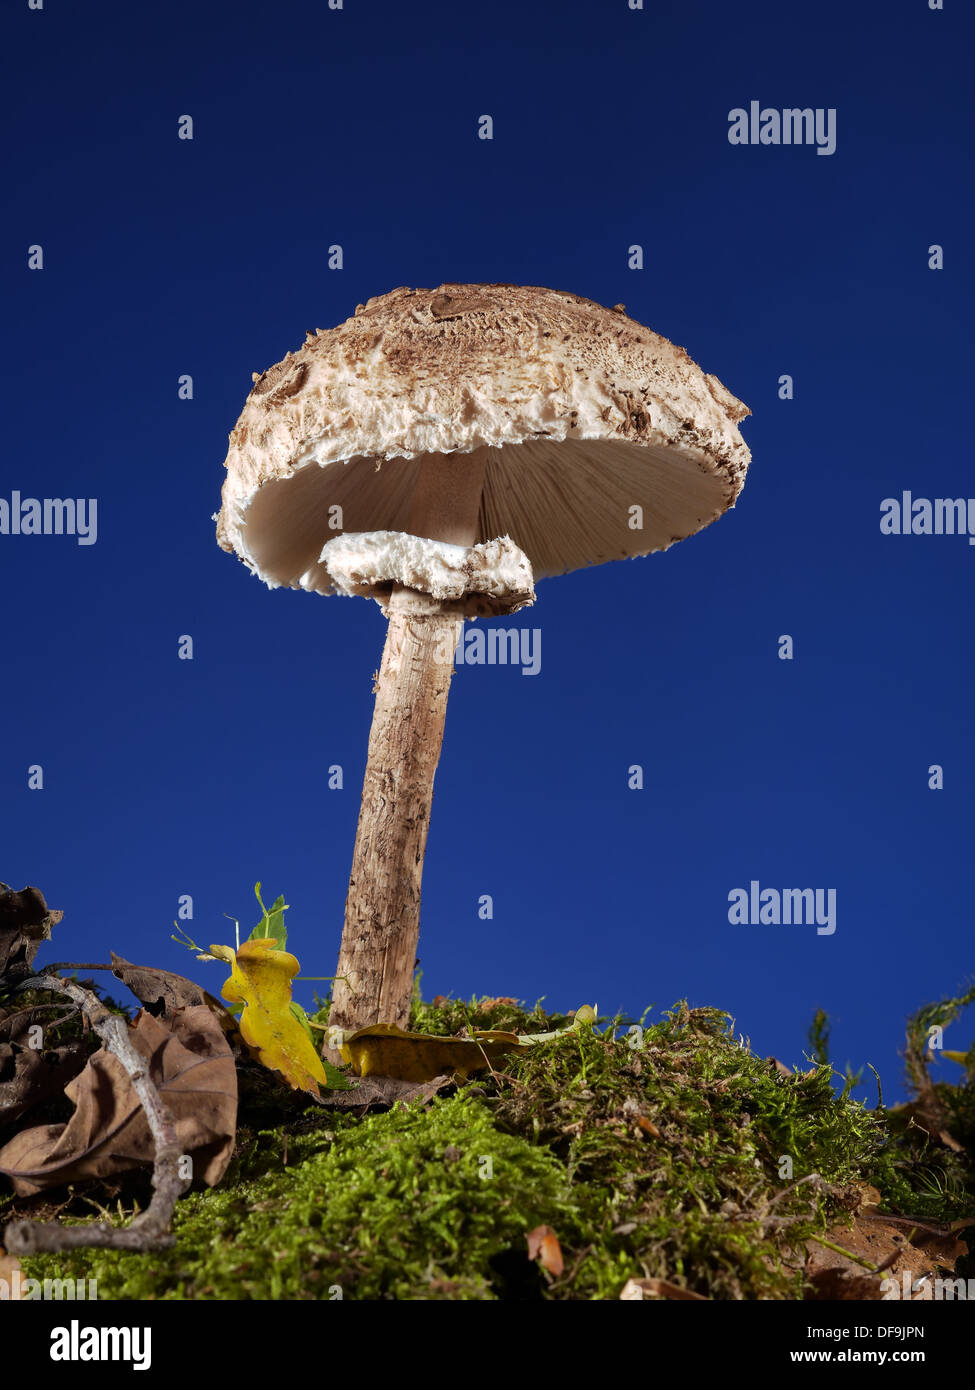 Parasol Fungus mushroom shot over dark blue background Stock Photo